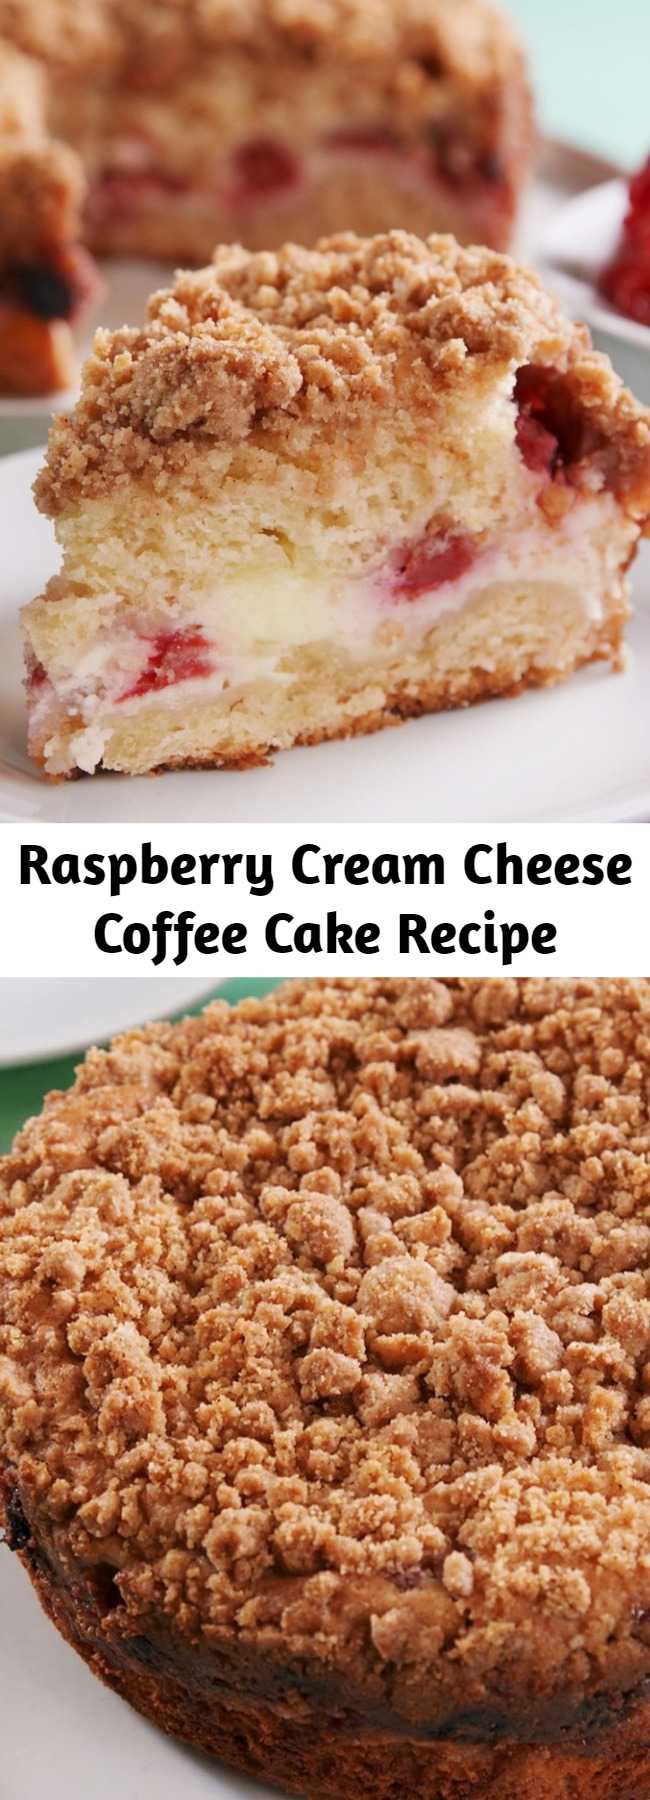 Raspberry Cream Cheese Coffee Cake Recipe - This Raspberry Cream Cheese Coffee Cake is the only coffee cake recipe you'll ever need.